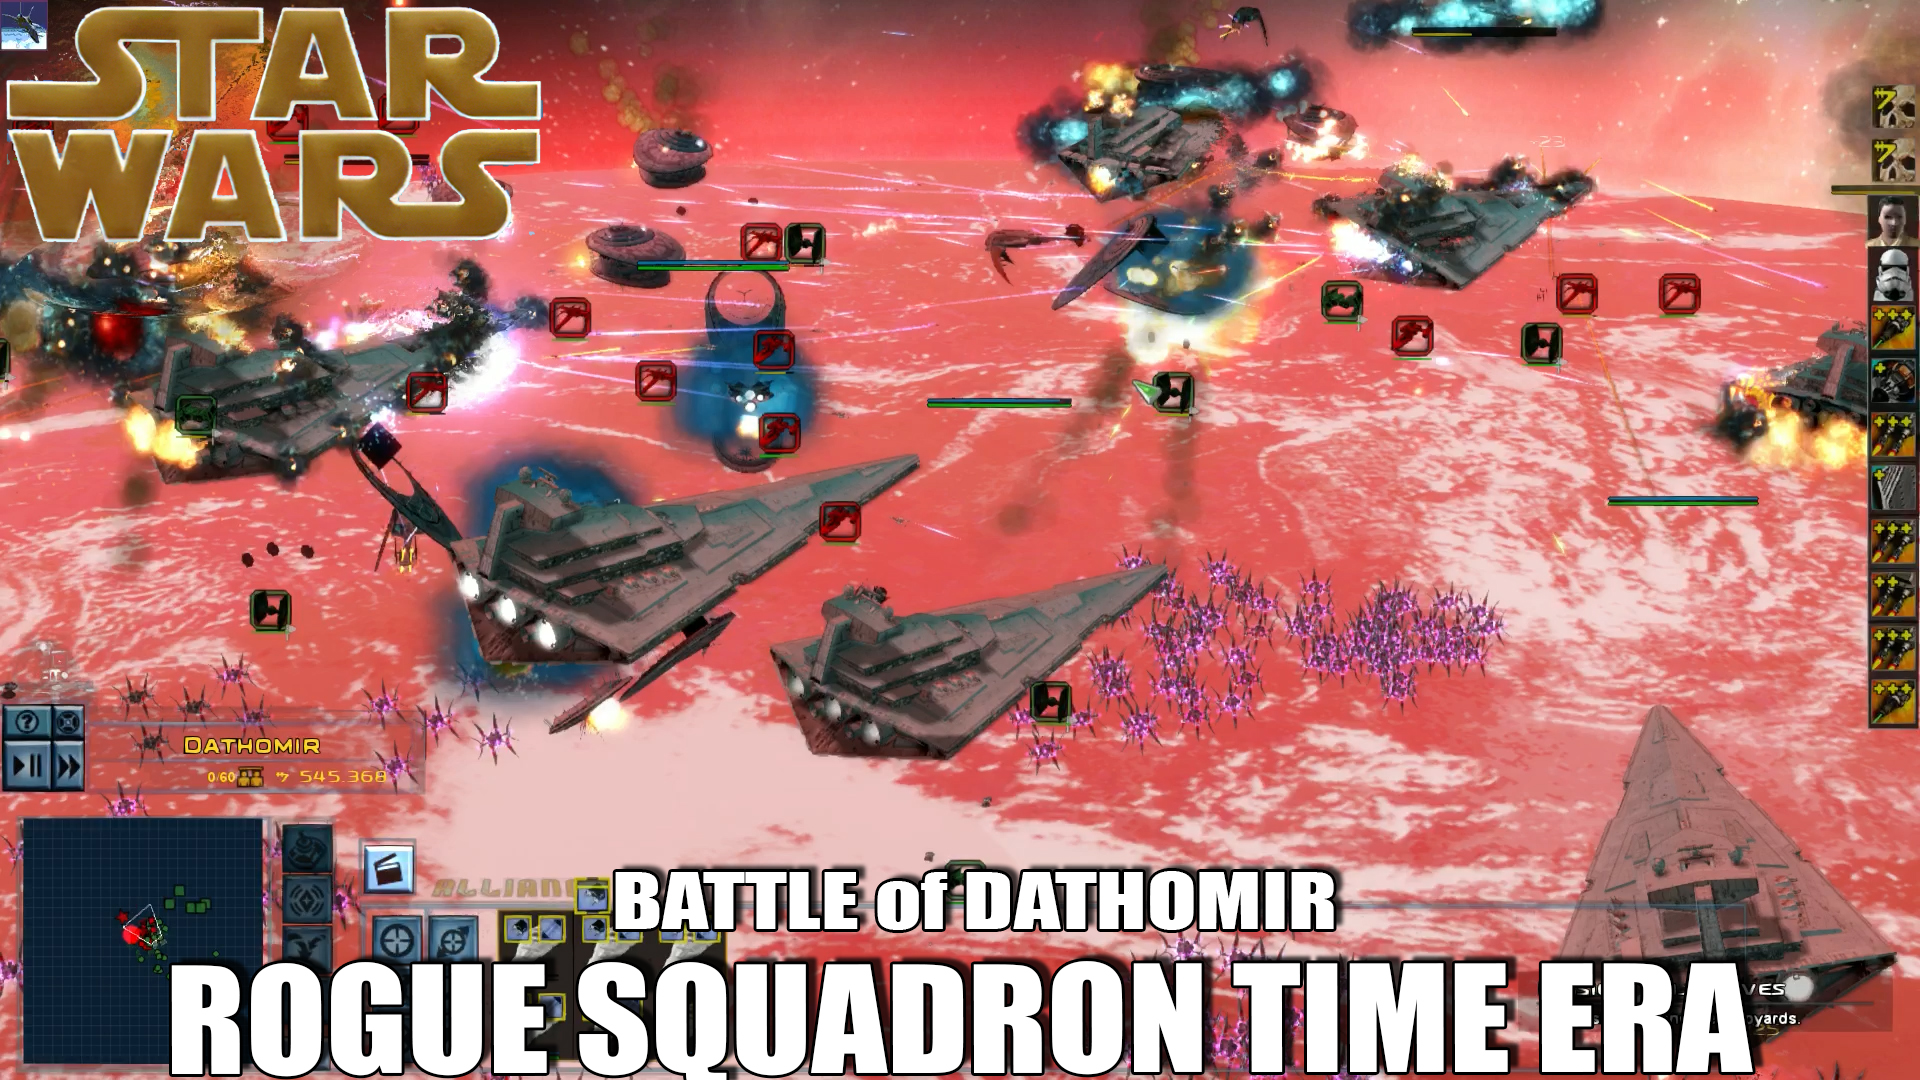 battle-of-dathomir-image-star-wars-alliance-rebellion-mod-for-star-wars-empire-at-war-forces